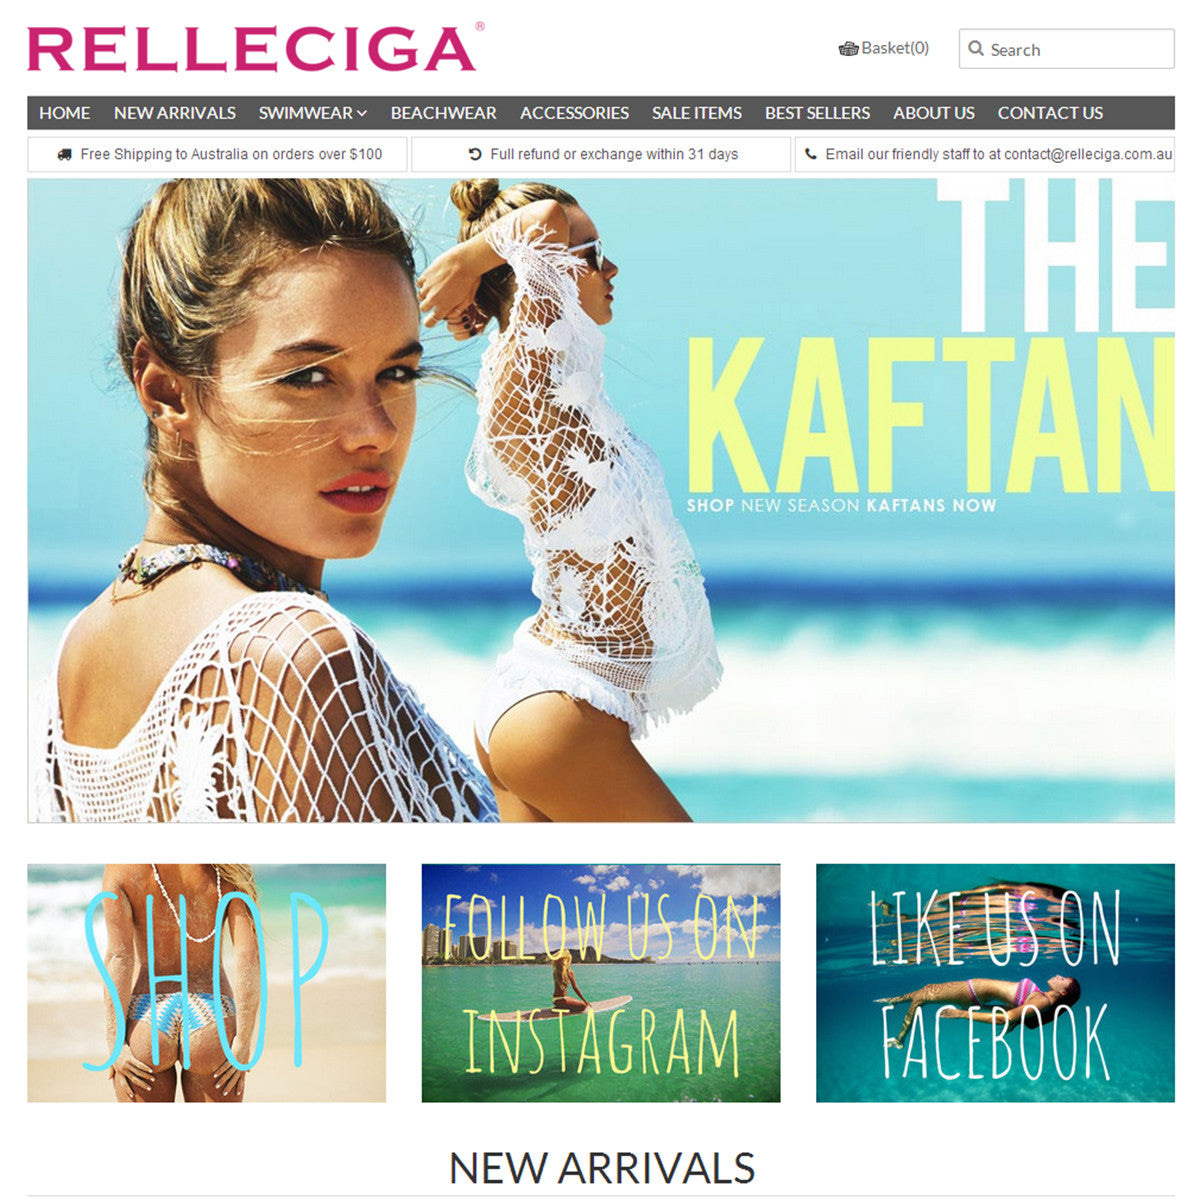 Relleciga Bikini - Photography and Web Design - Los Angeles, US based Shopify Experts Revo Designs